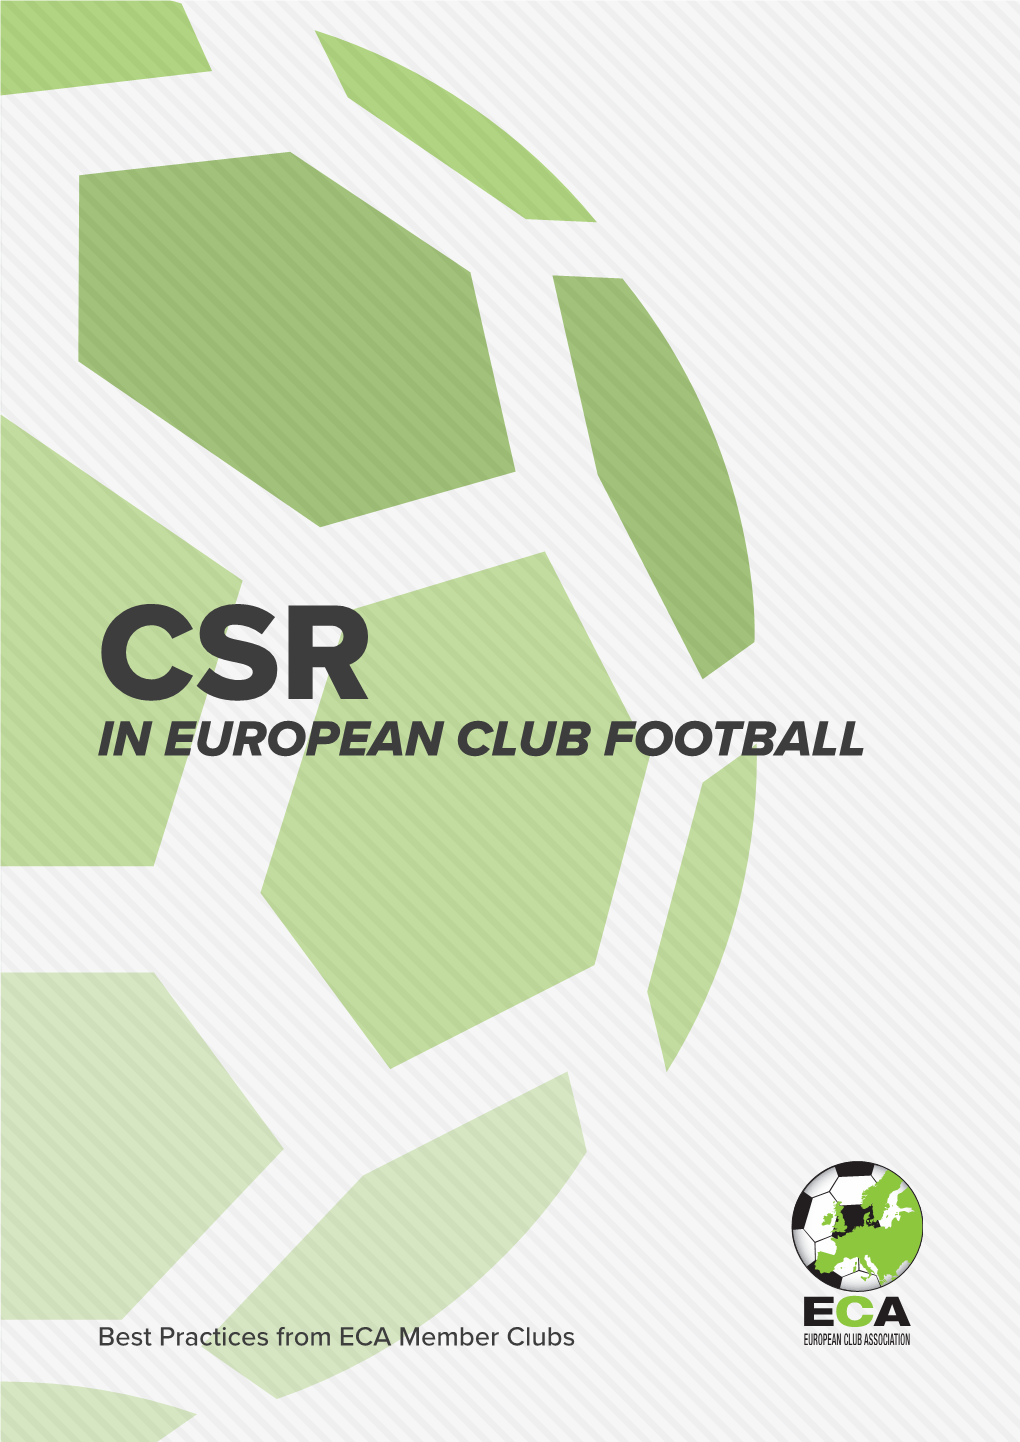 CSR in European Club Football – Best Practices from ECA Member Clubs” Is an ECA Publication Focusing on ECA Member Clubs’ CSR Projects